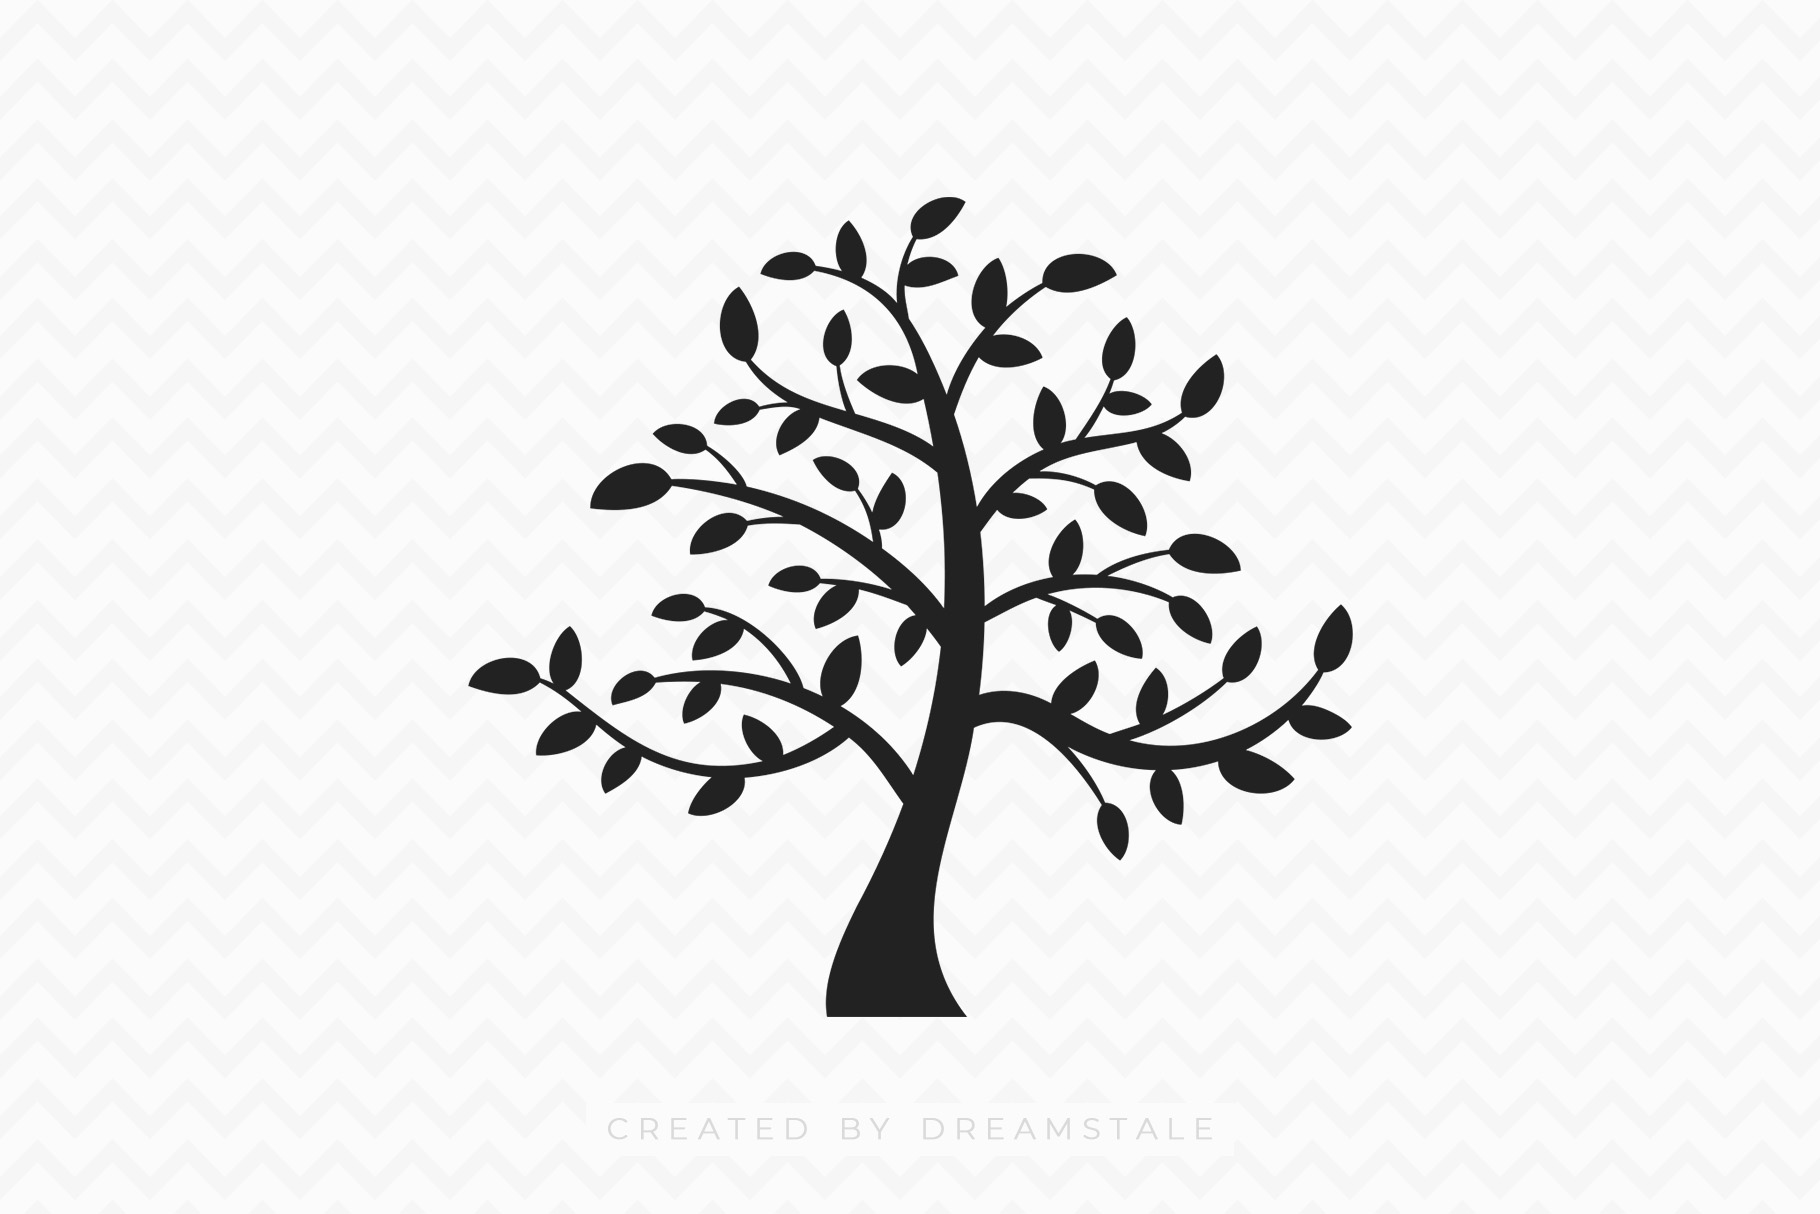 Tree SVG Free Clipart Image